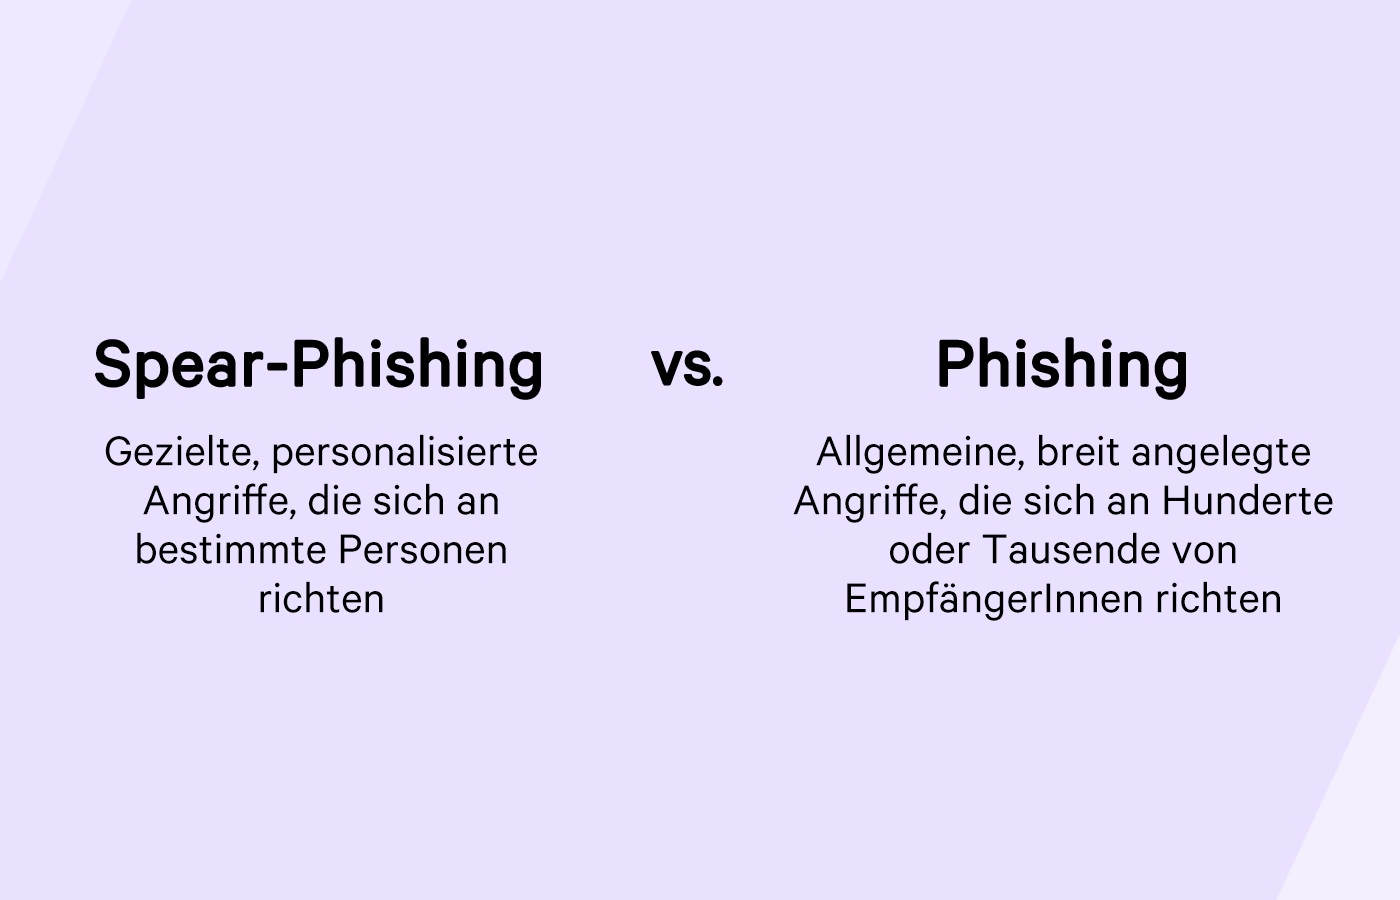 Spear-Phishing und Phishing im Vergleich